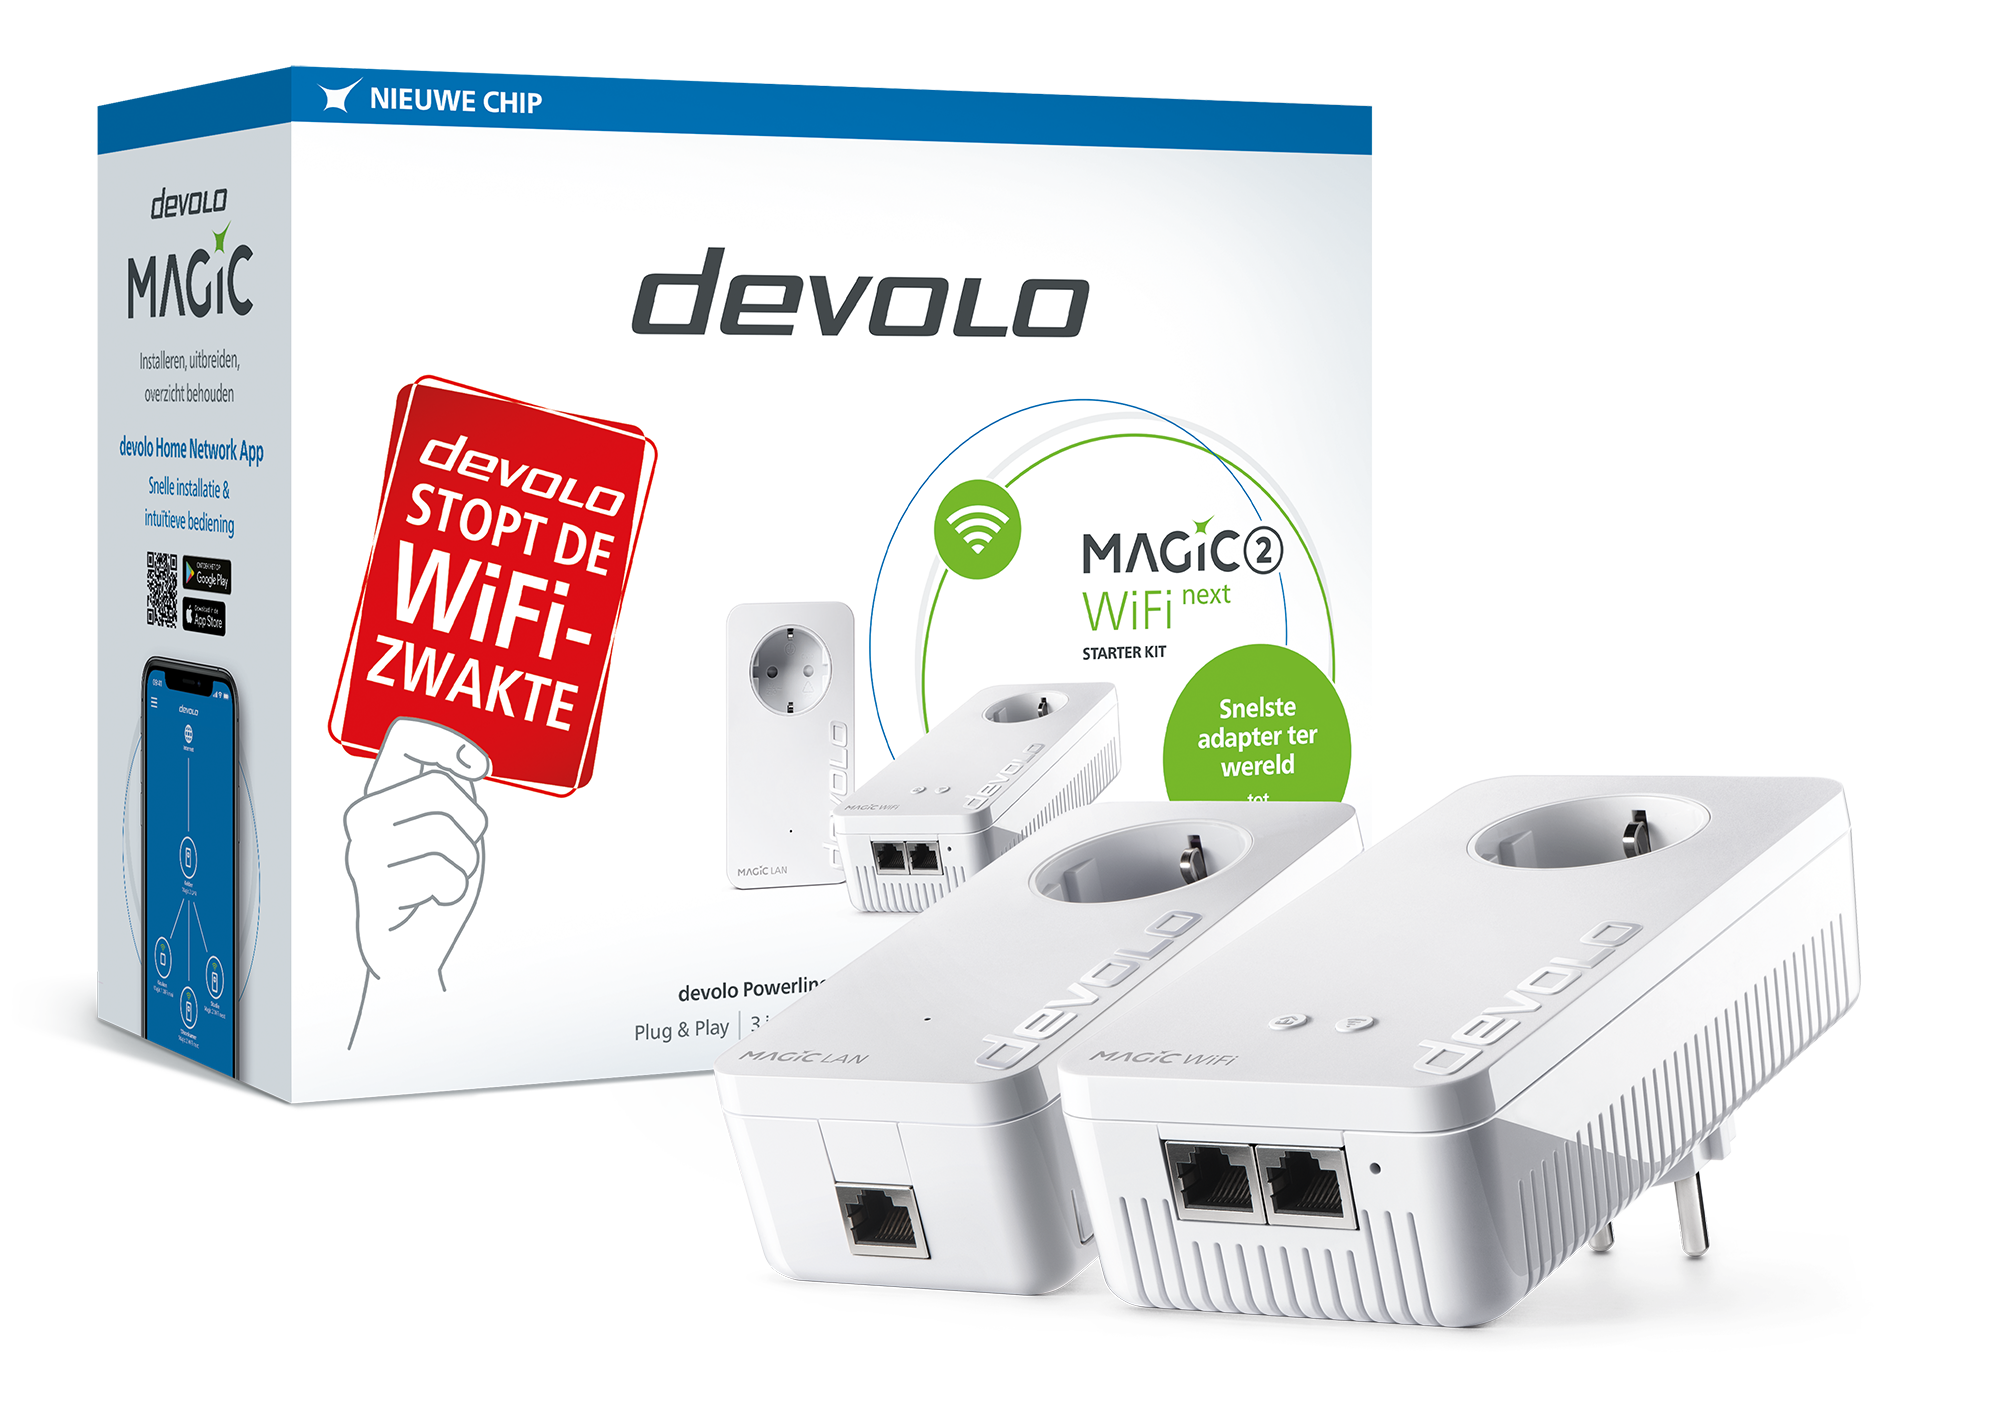 Devolo magic 2 wifi next starter kit PowerLine WiFi adapter, AC+N Dual Band